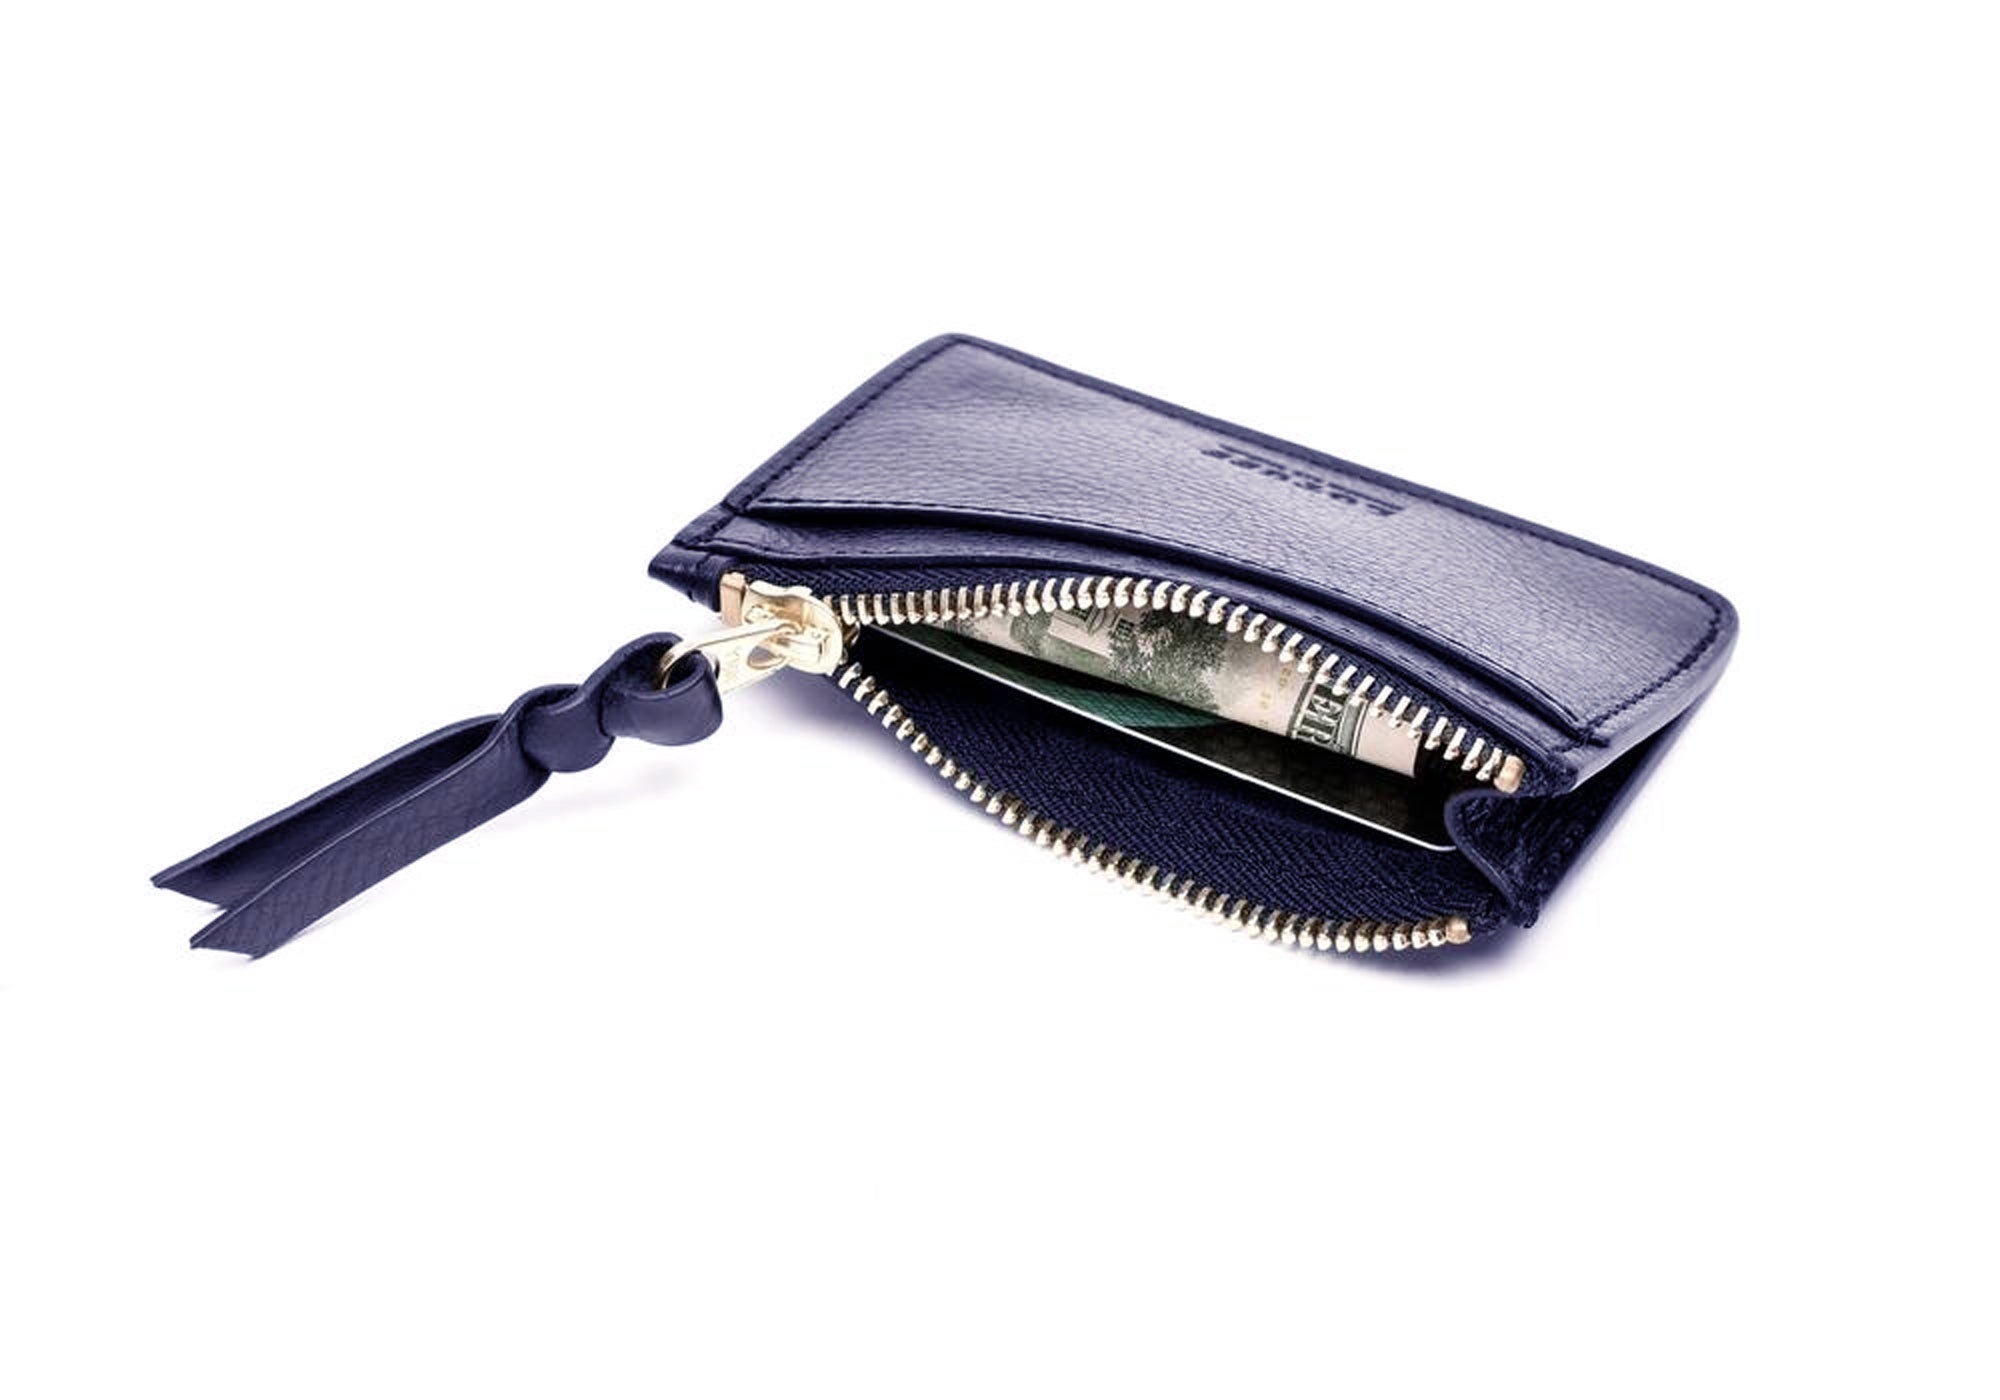 Blue Leather Zip Wallet